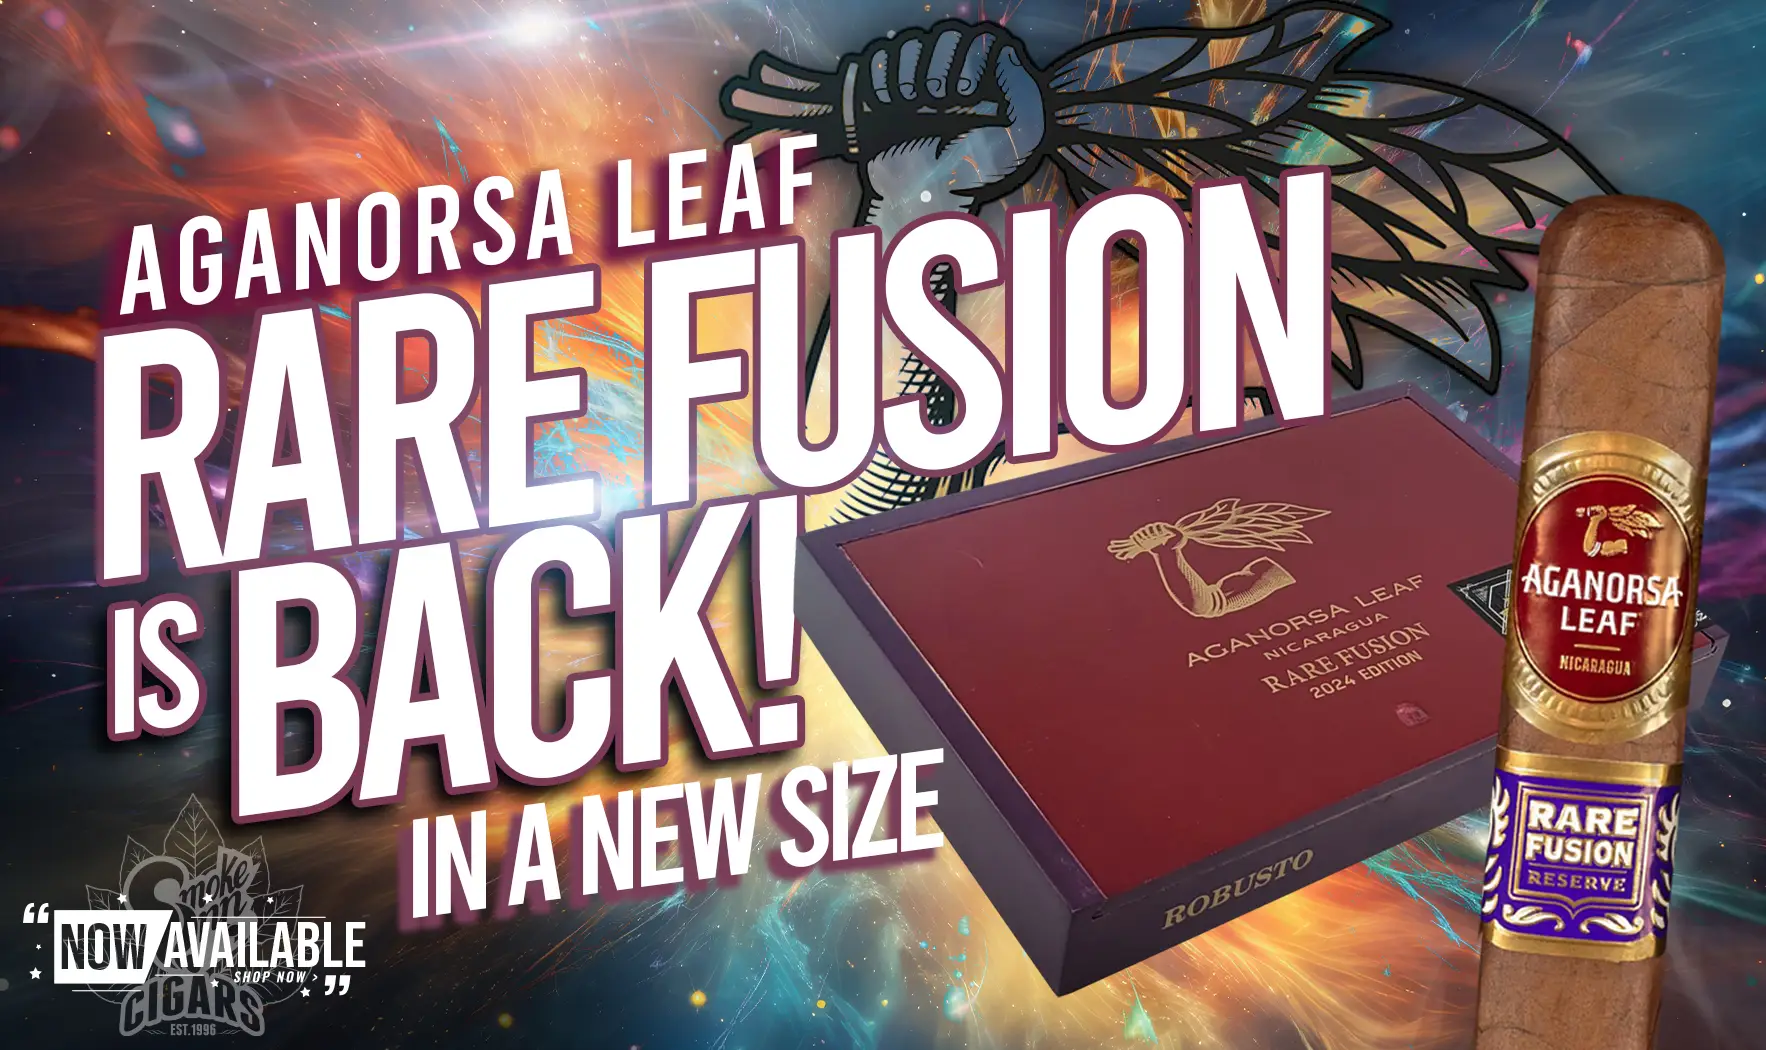 Aganorsa Rare Fusion Smoke Inn Exclusive Microblend